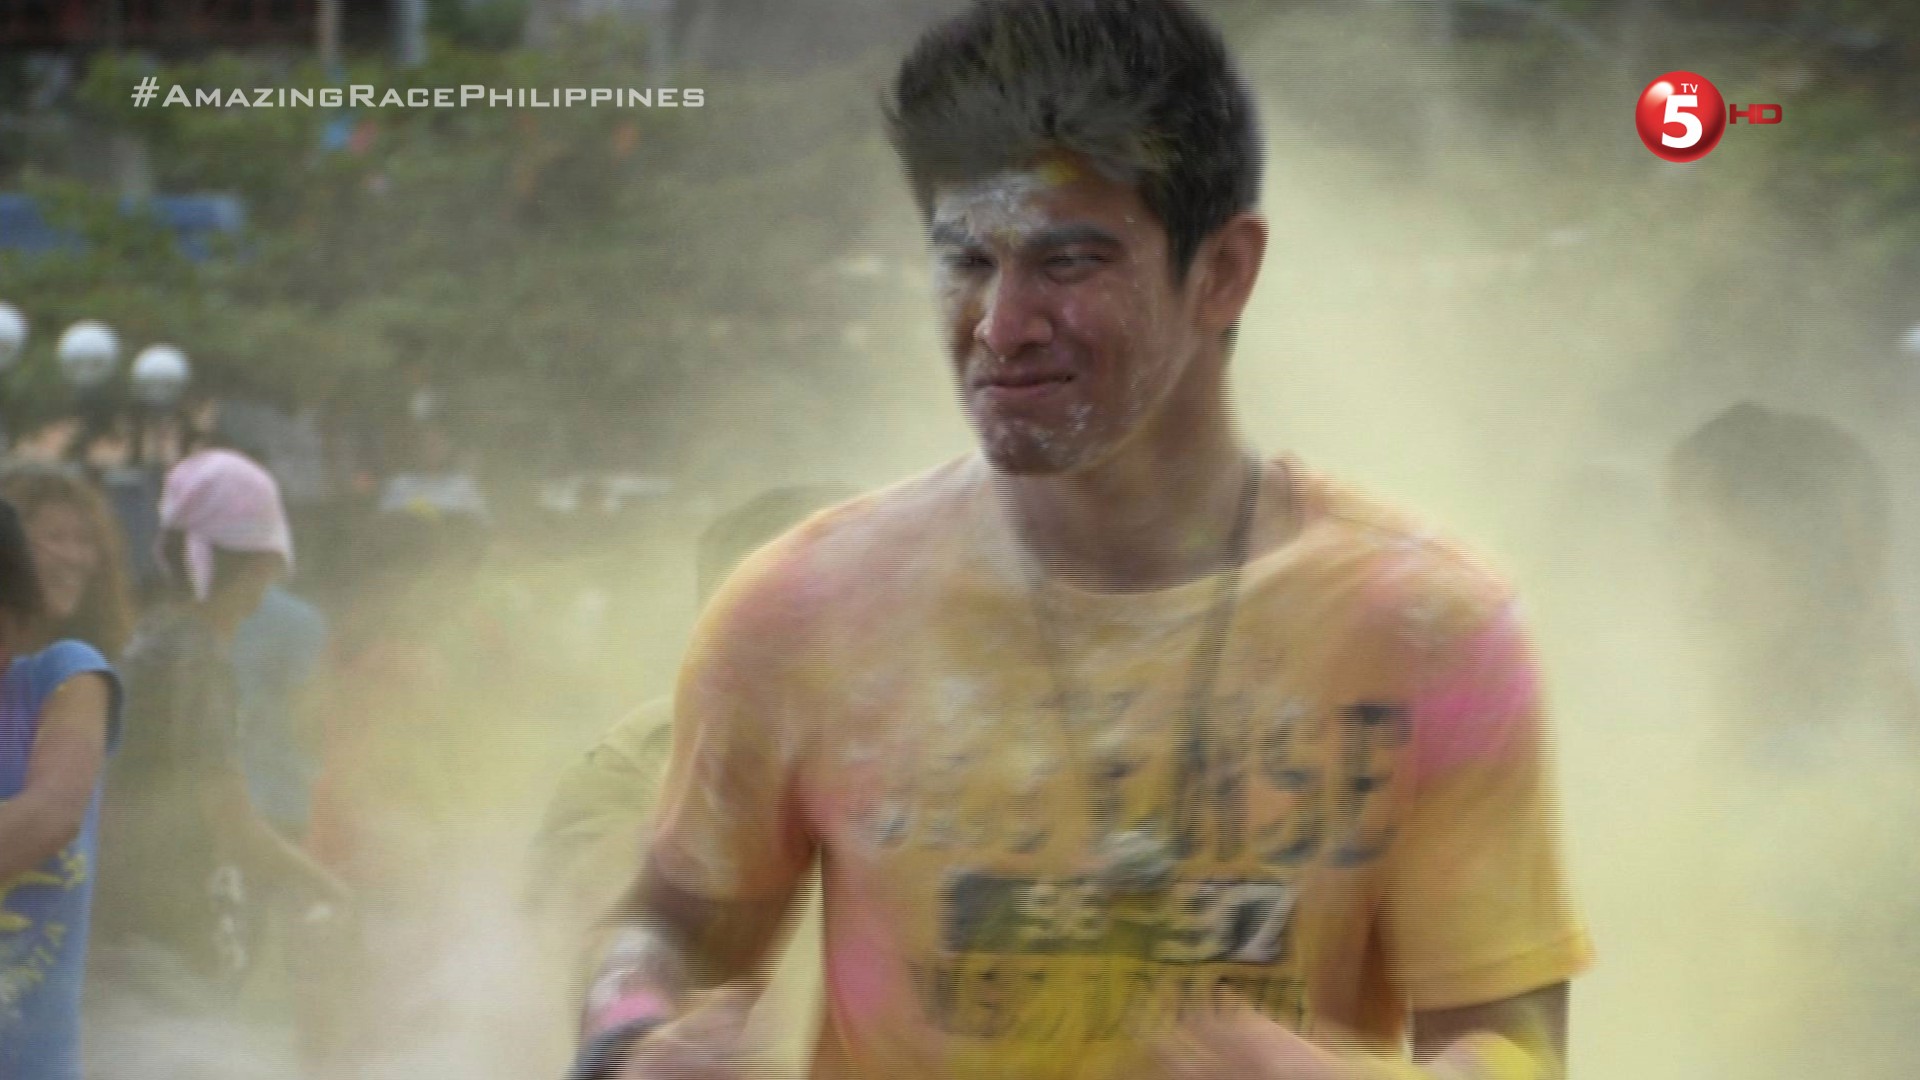 Recap:  The Amazing Race Philippines 2, Episode 37 (Leg 7, Day 1) – "Hindi masaya batuhin ka!"